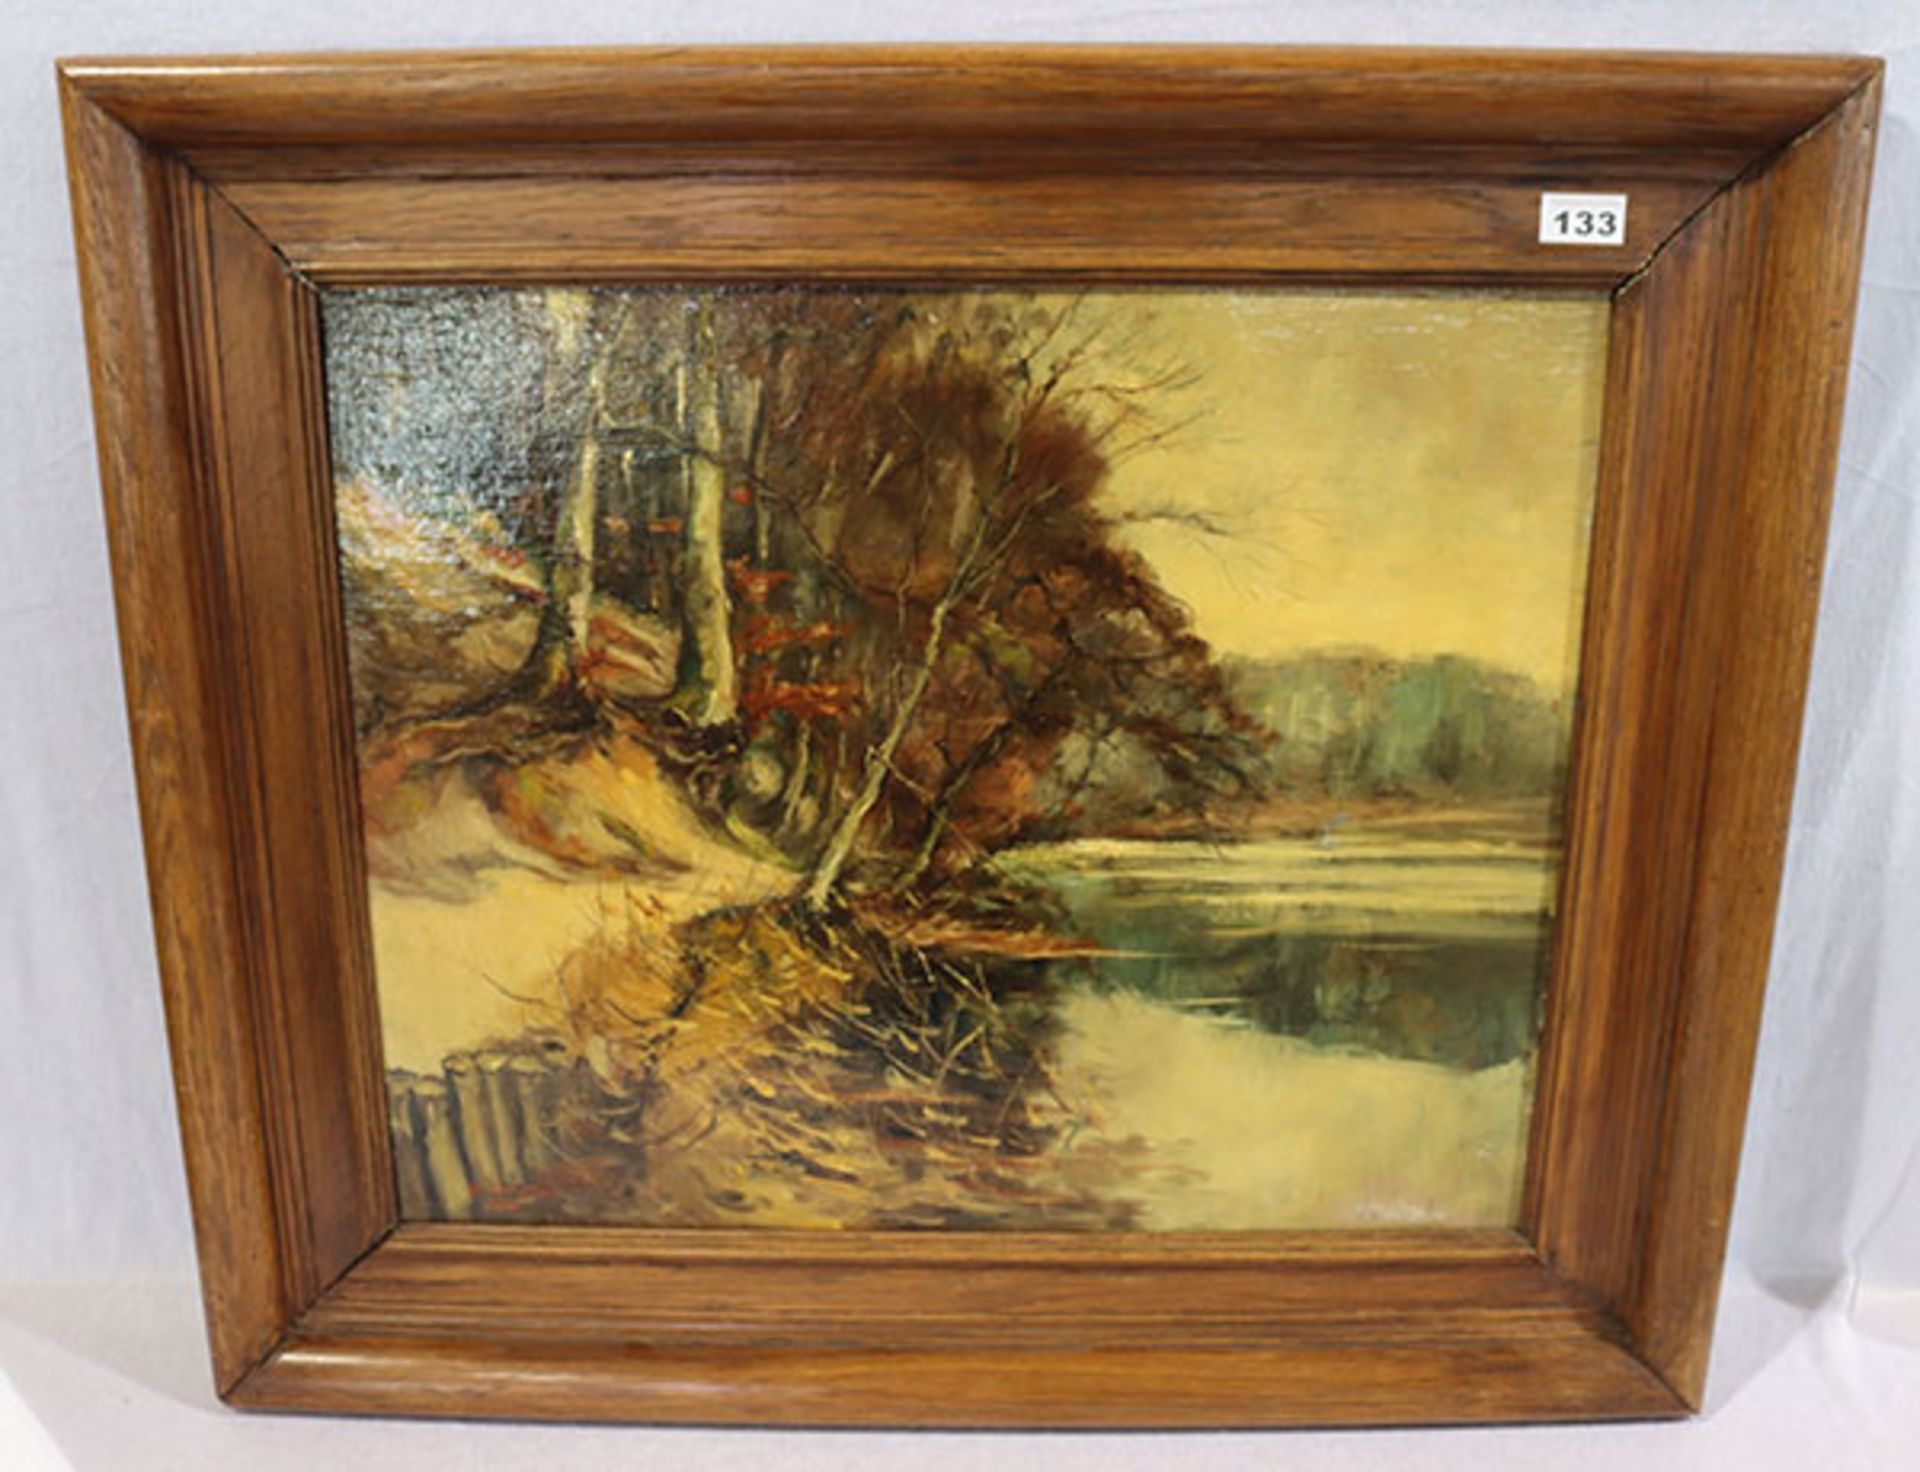 Gemälde ÖL/Holz 'Uferlandschaft im Herbst', signiert Clement, Bildoberfläche teils beschädigt,